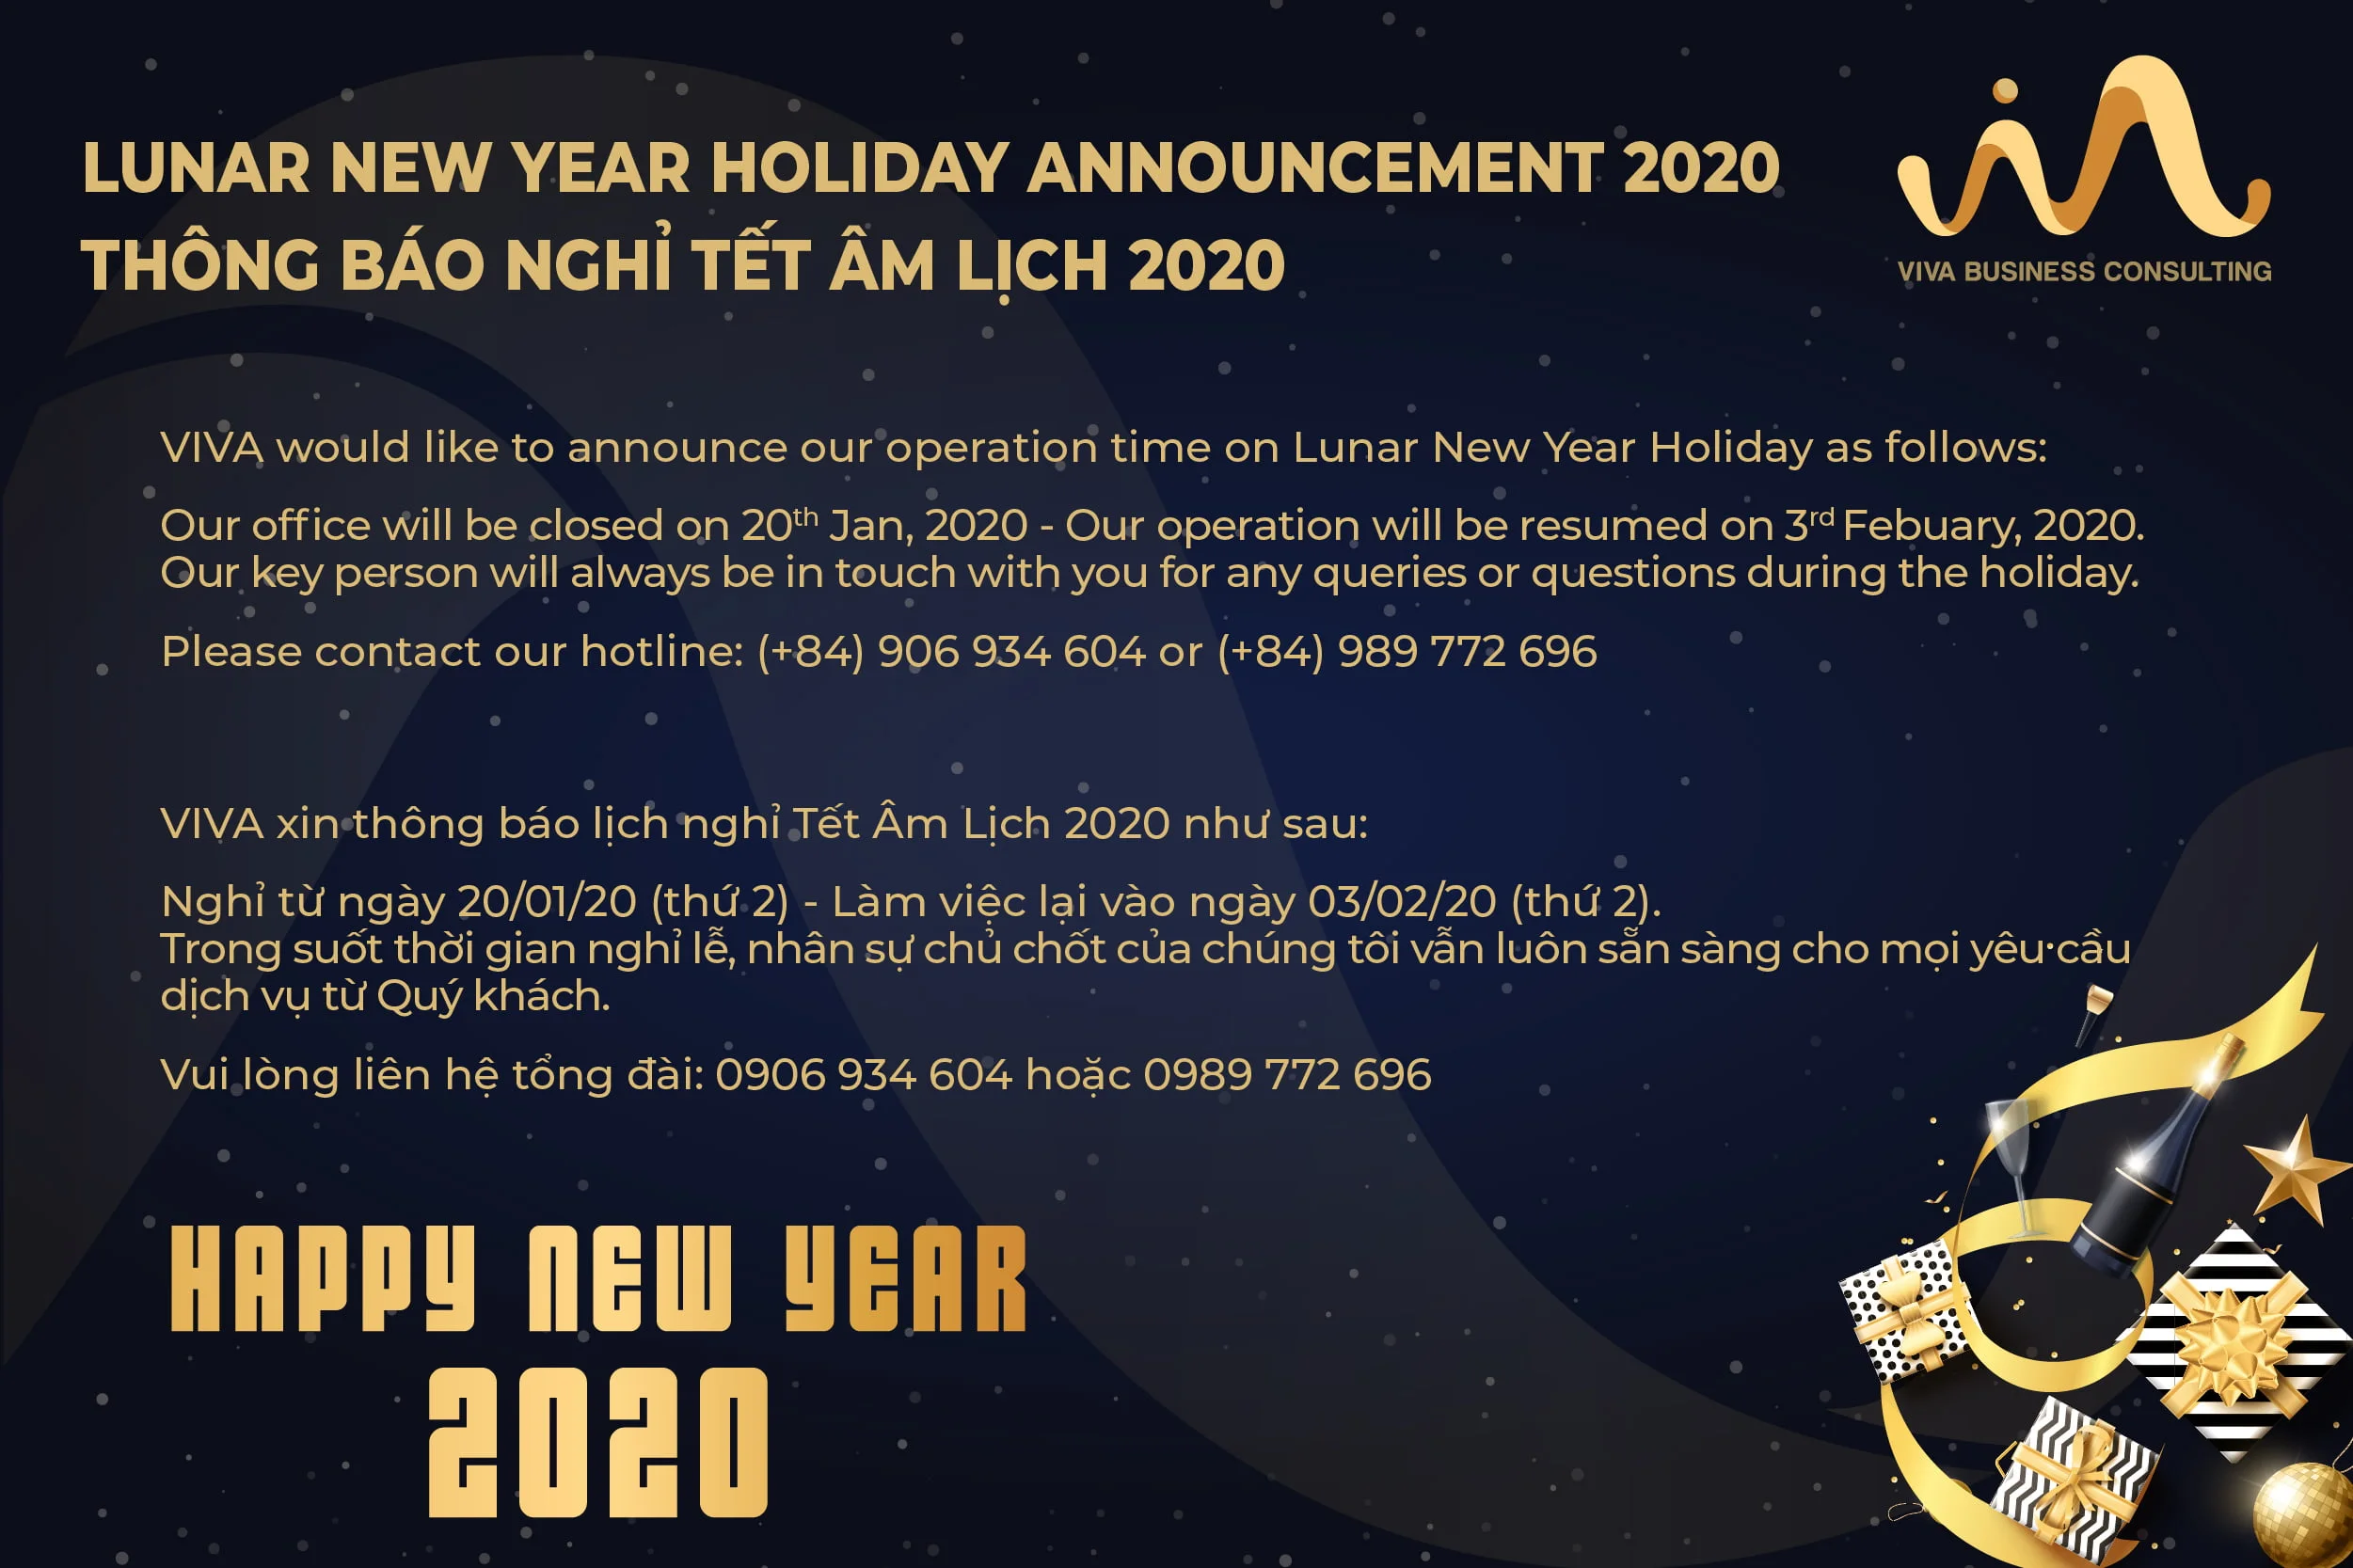 Lunar new year announcement 2020